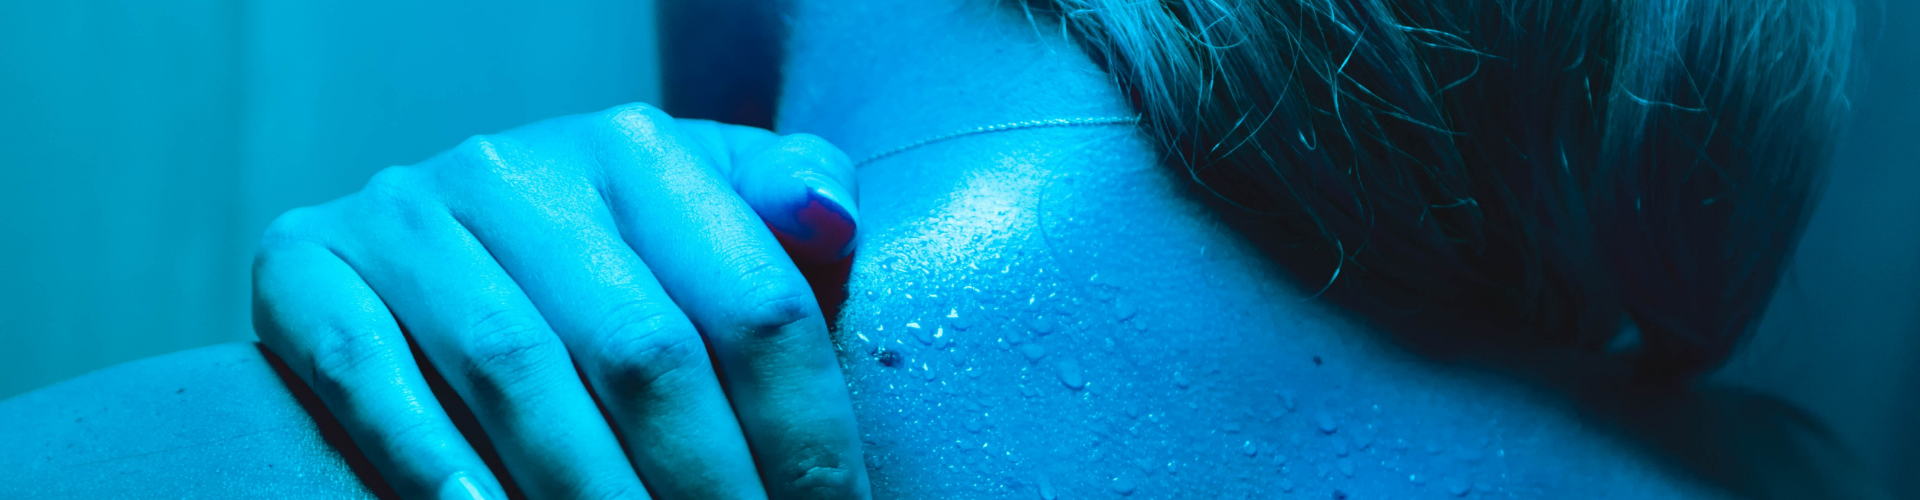 closeup of a woman's back sweating in a sauna